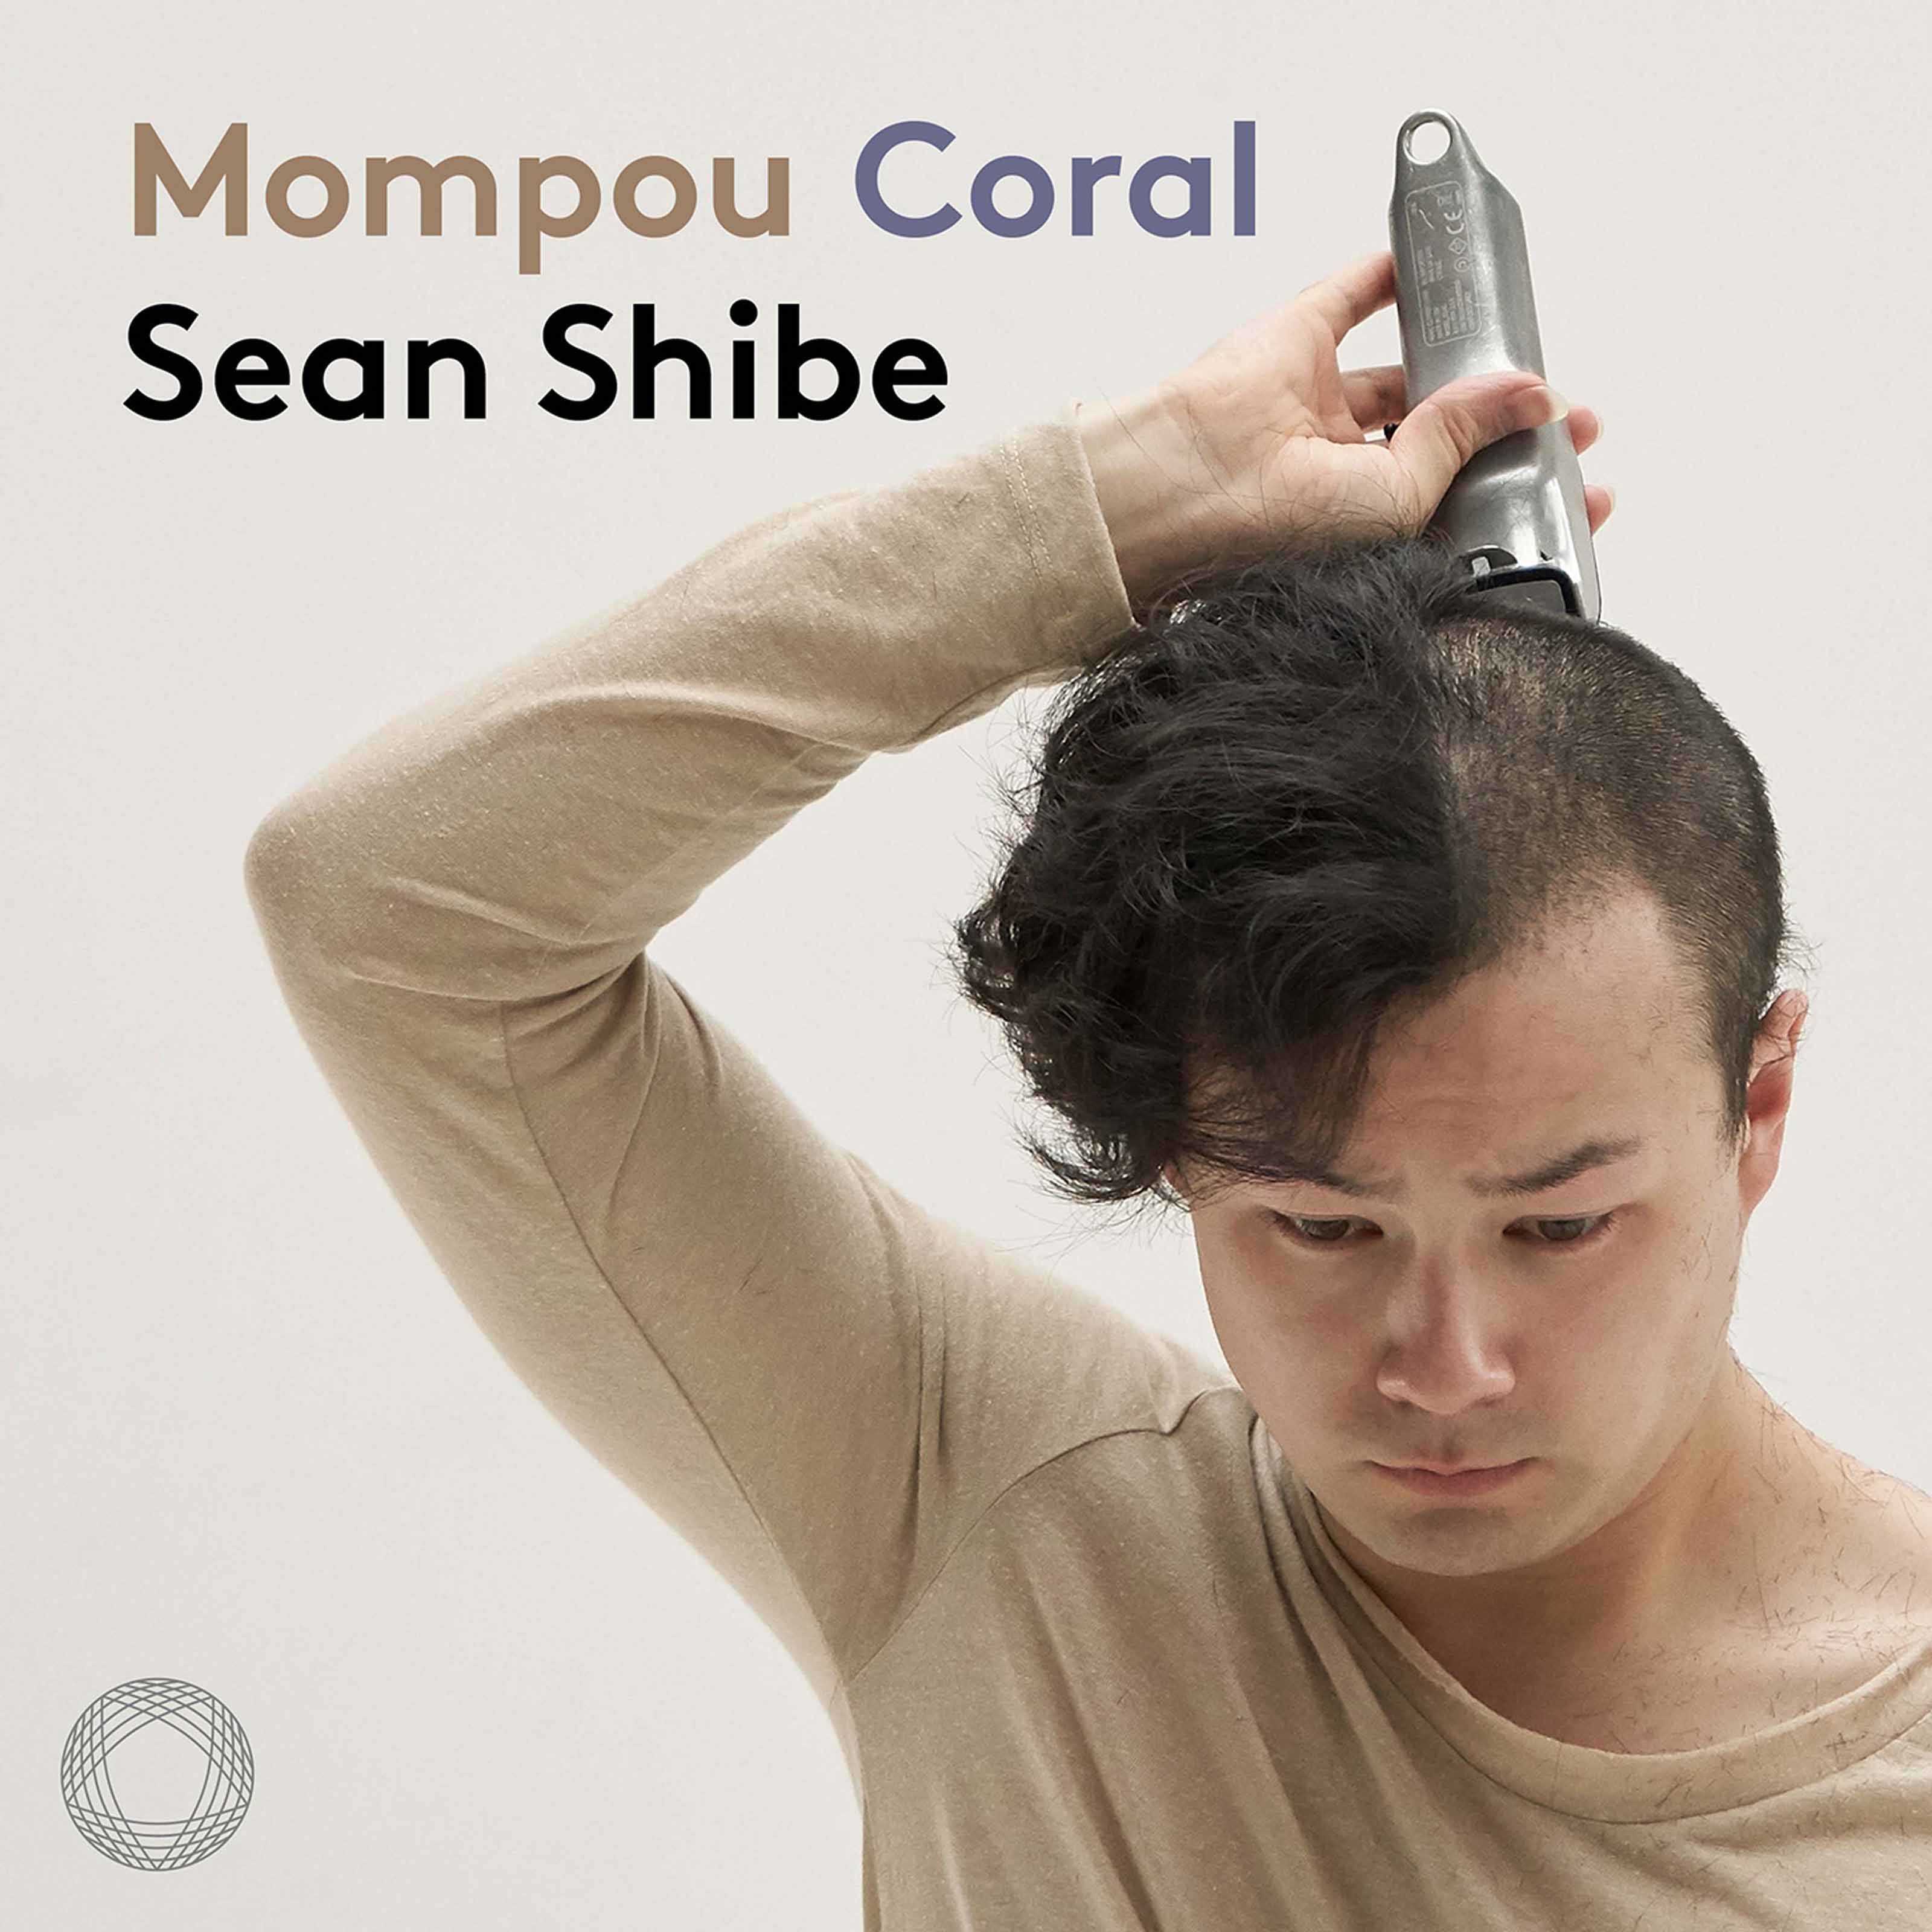 Sean Shibe – Suite compostelana- II. Coral